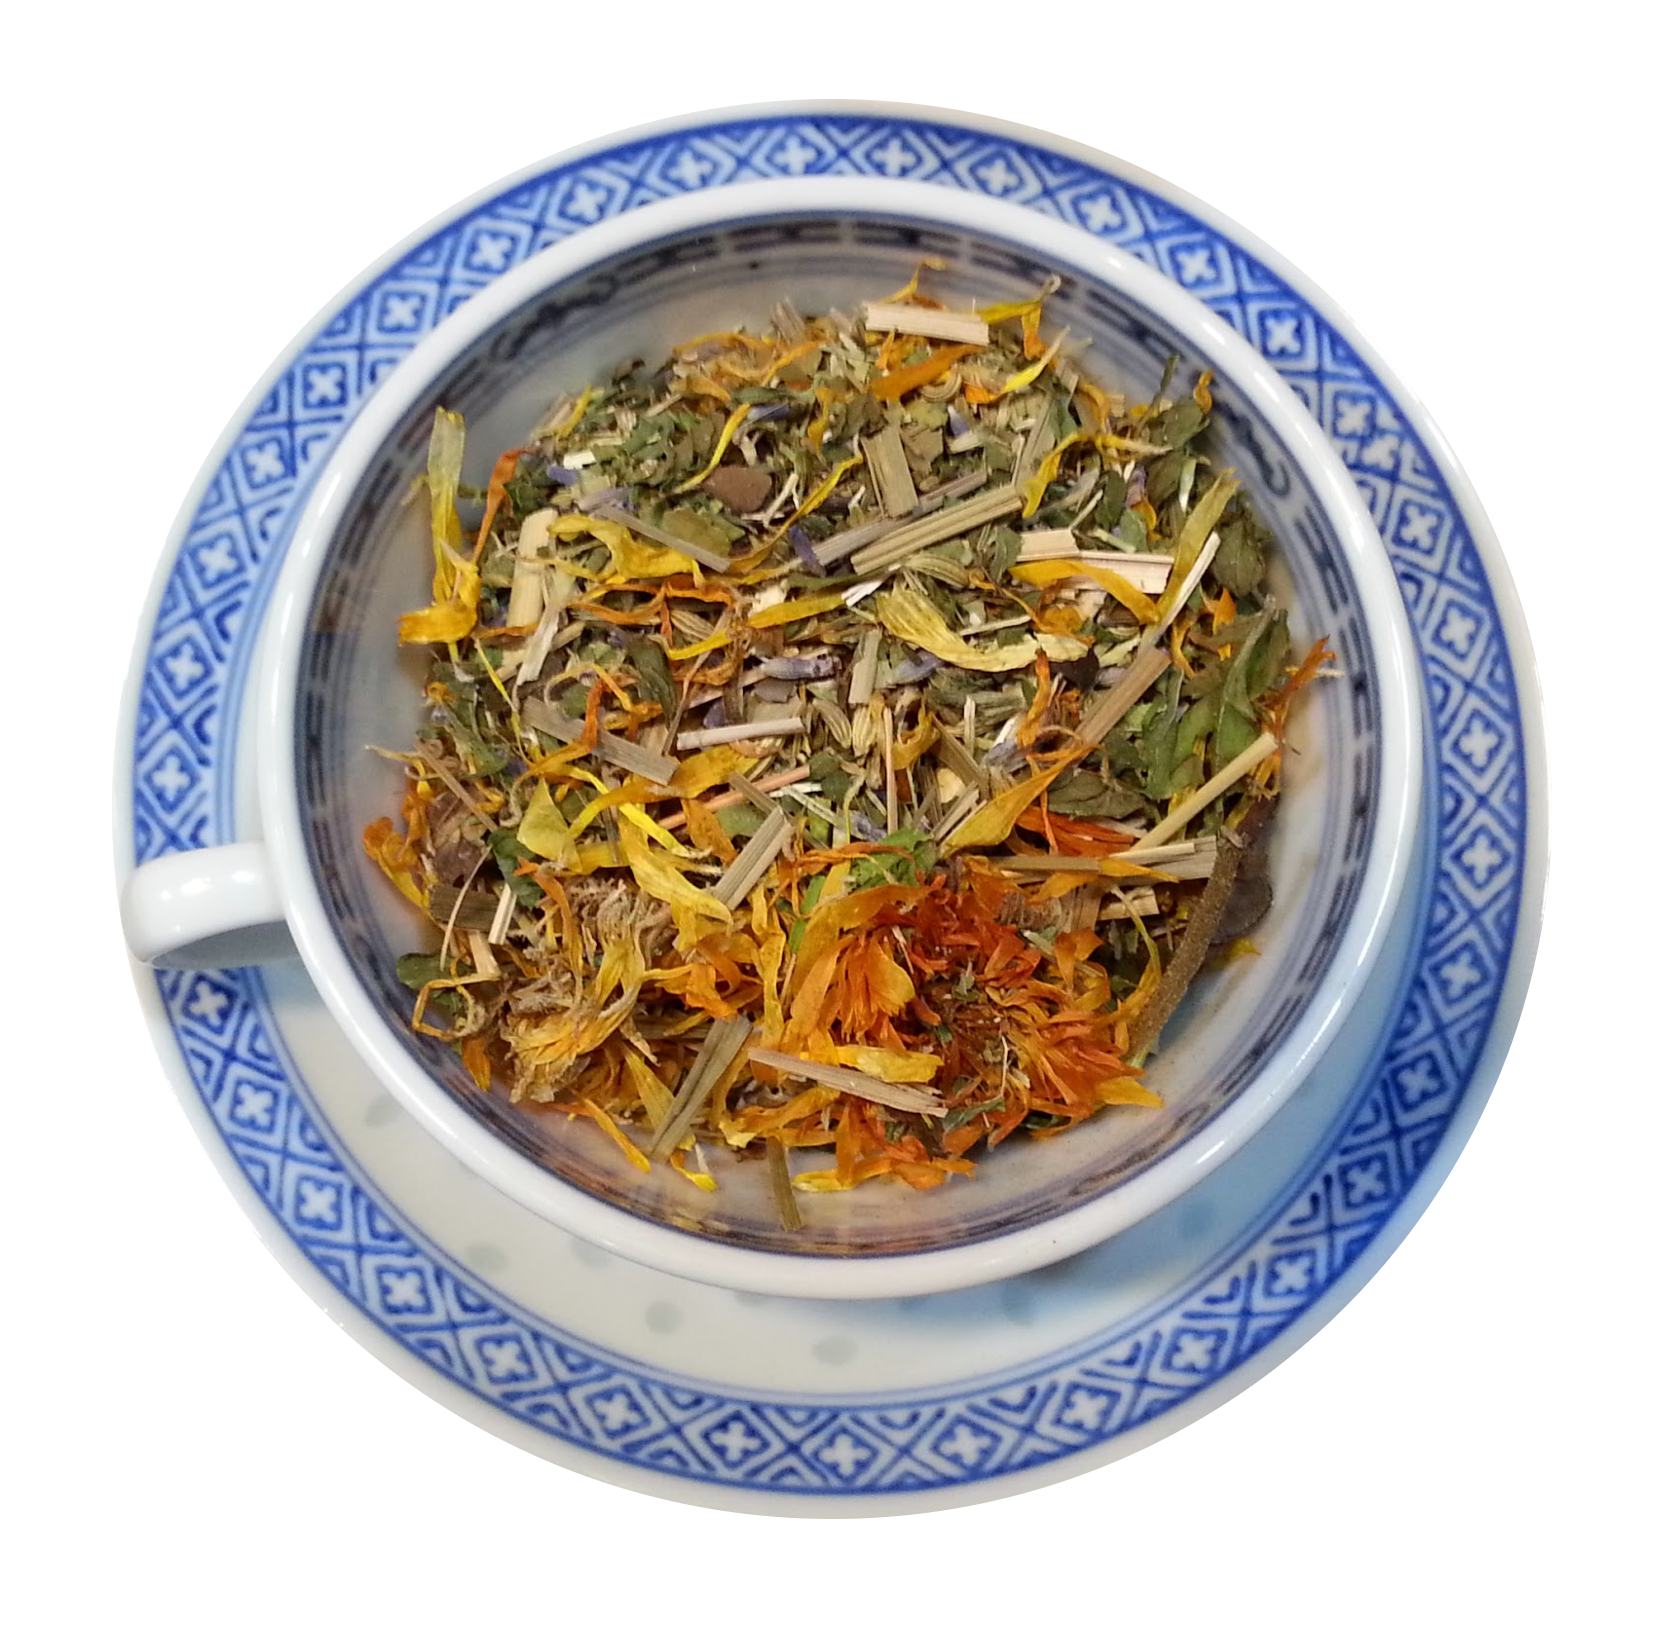 Aller Care Gourmet Herbal Tea Blend: Set of 2 Tea Bags